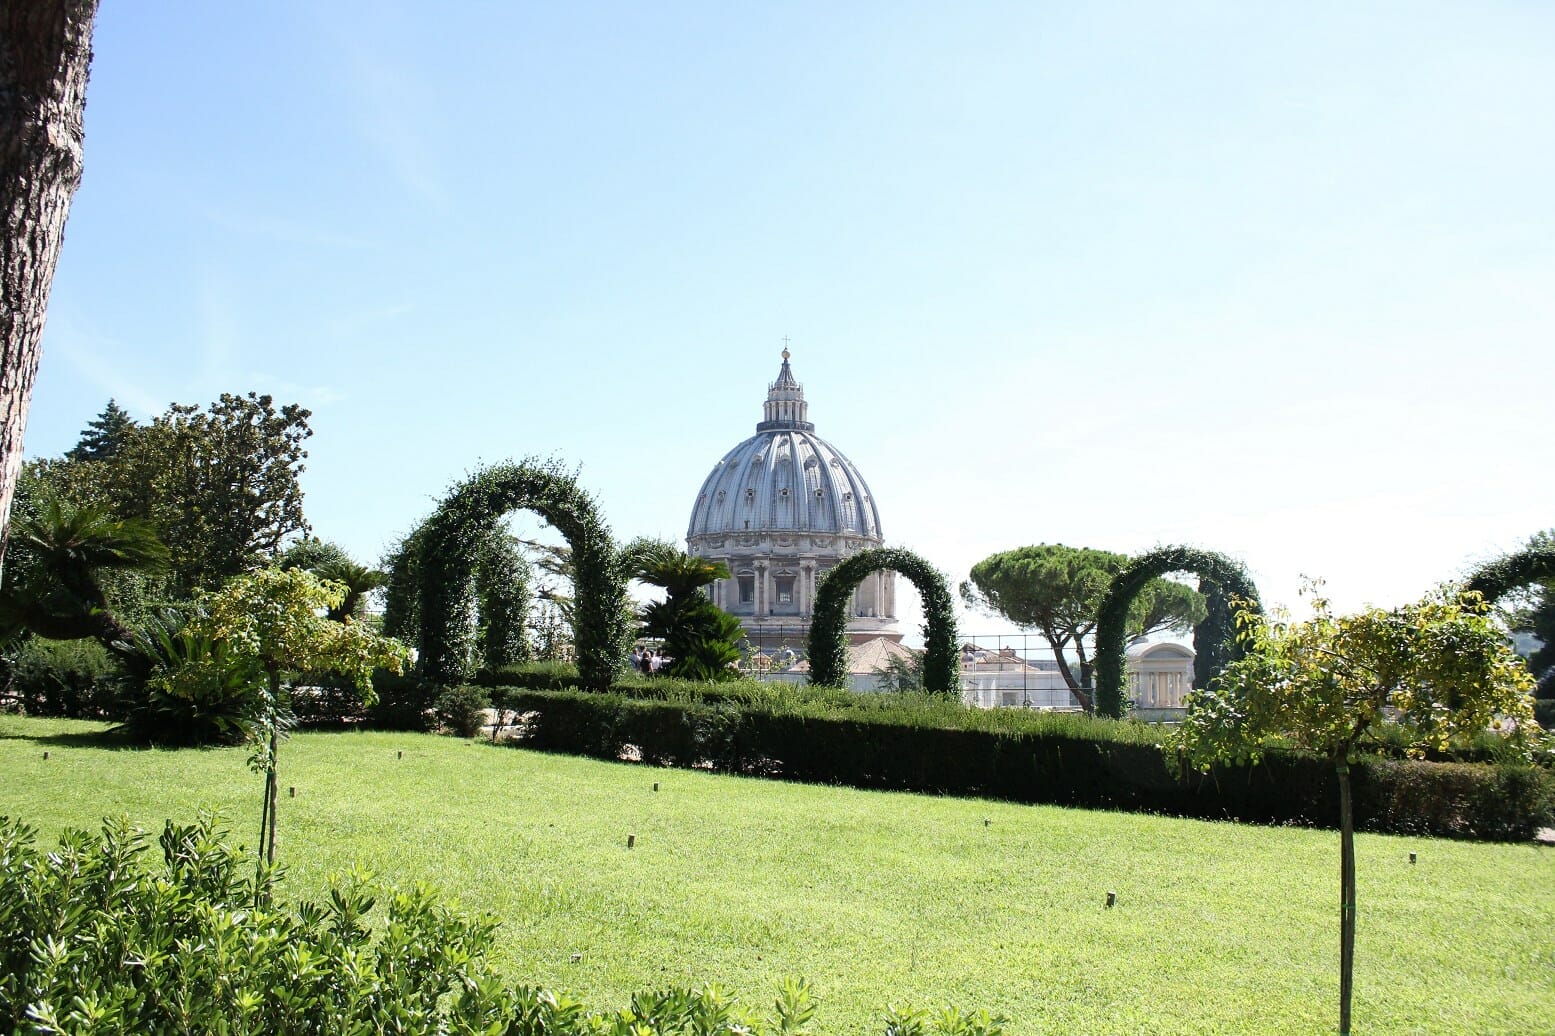 hwo to Skip the Line in rome Vatican Garden